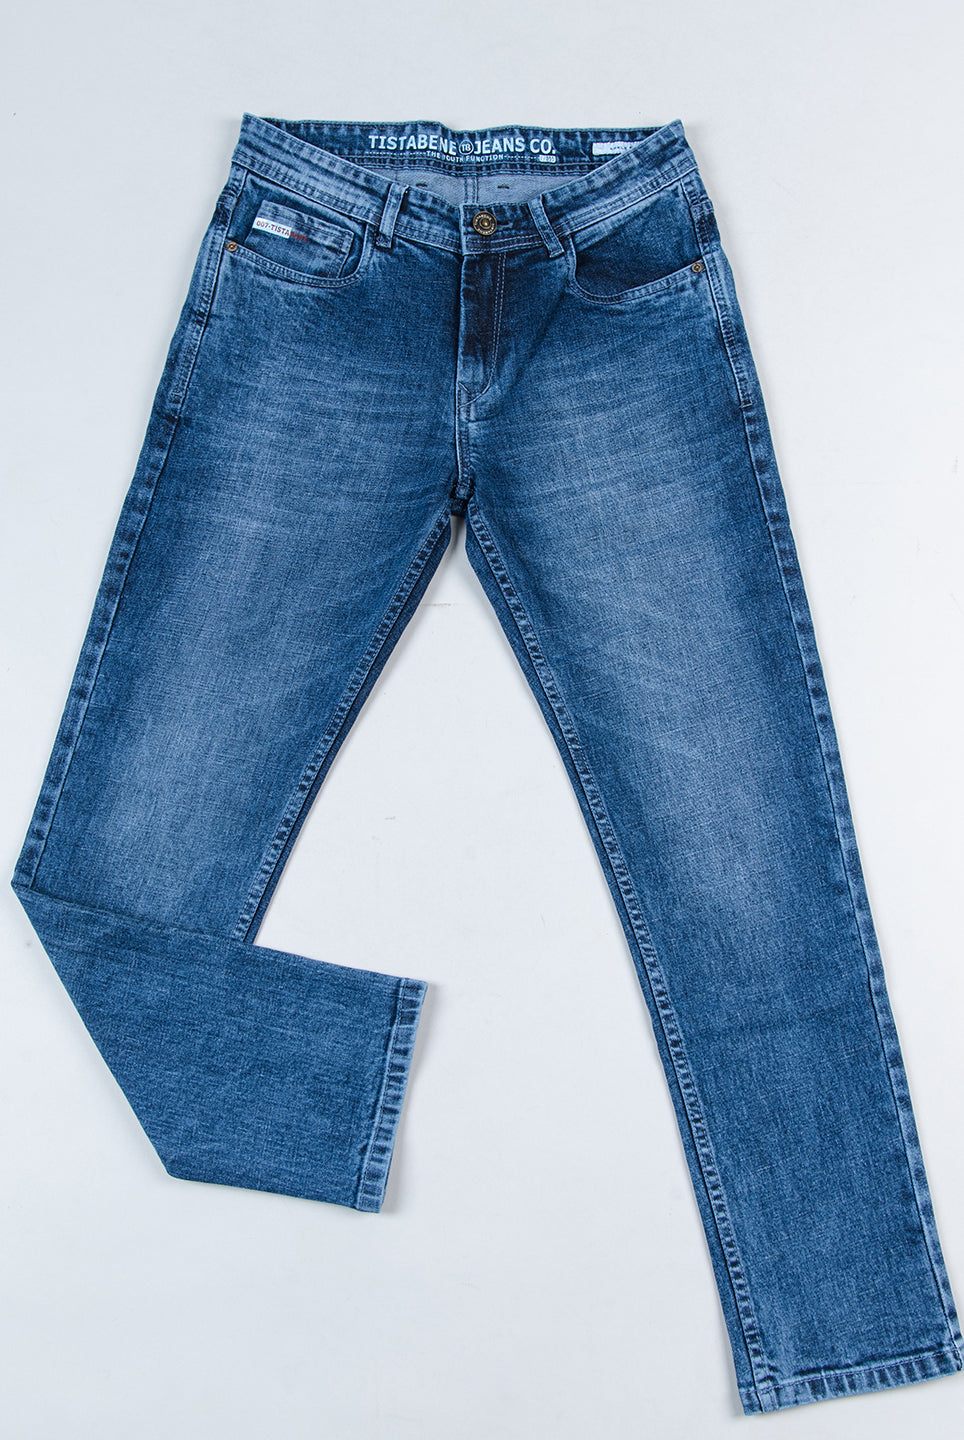 blue denim jeans  for men